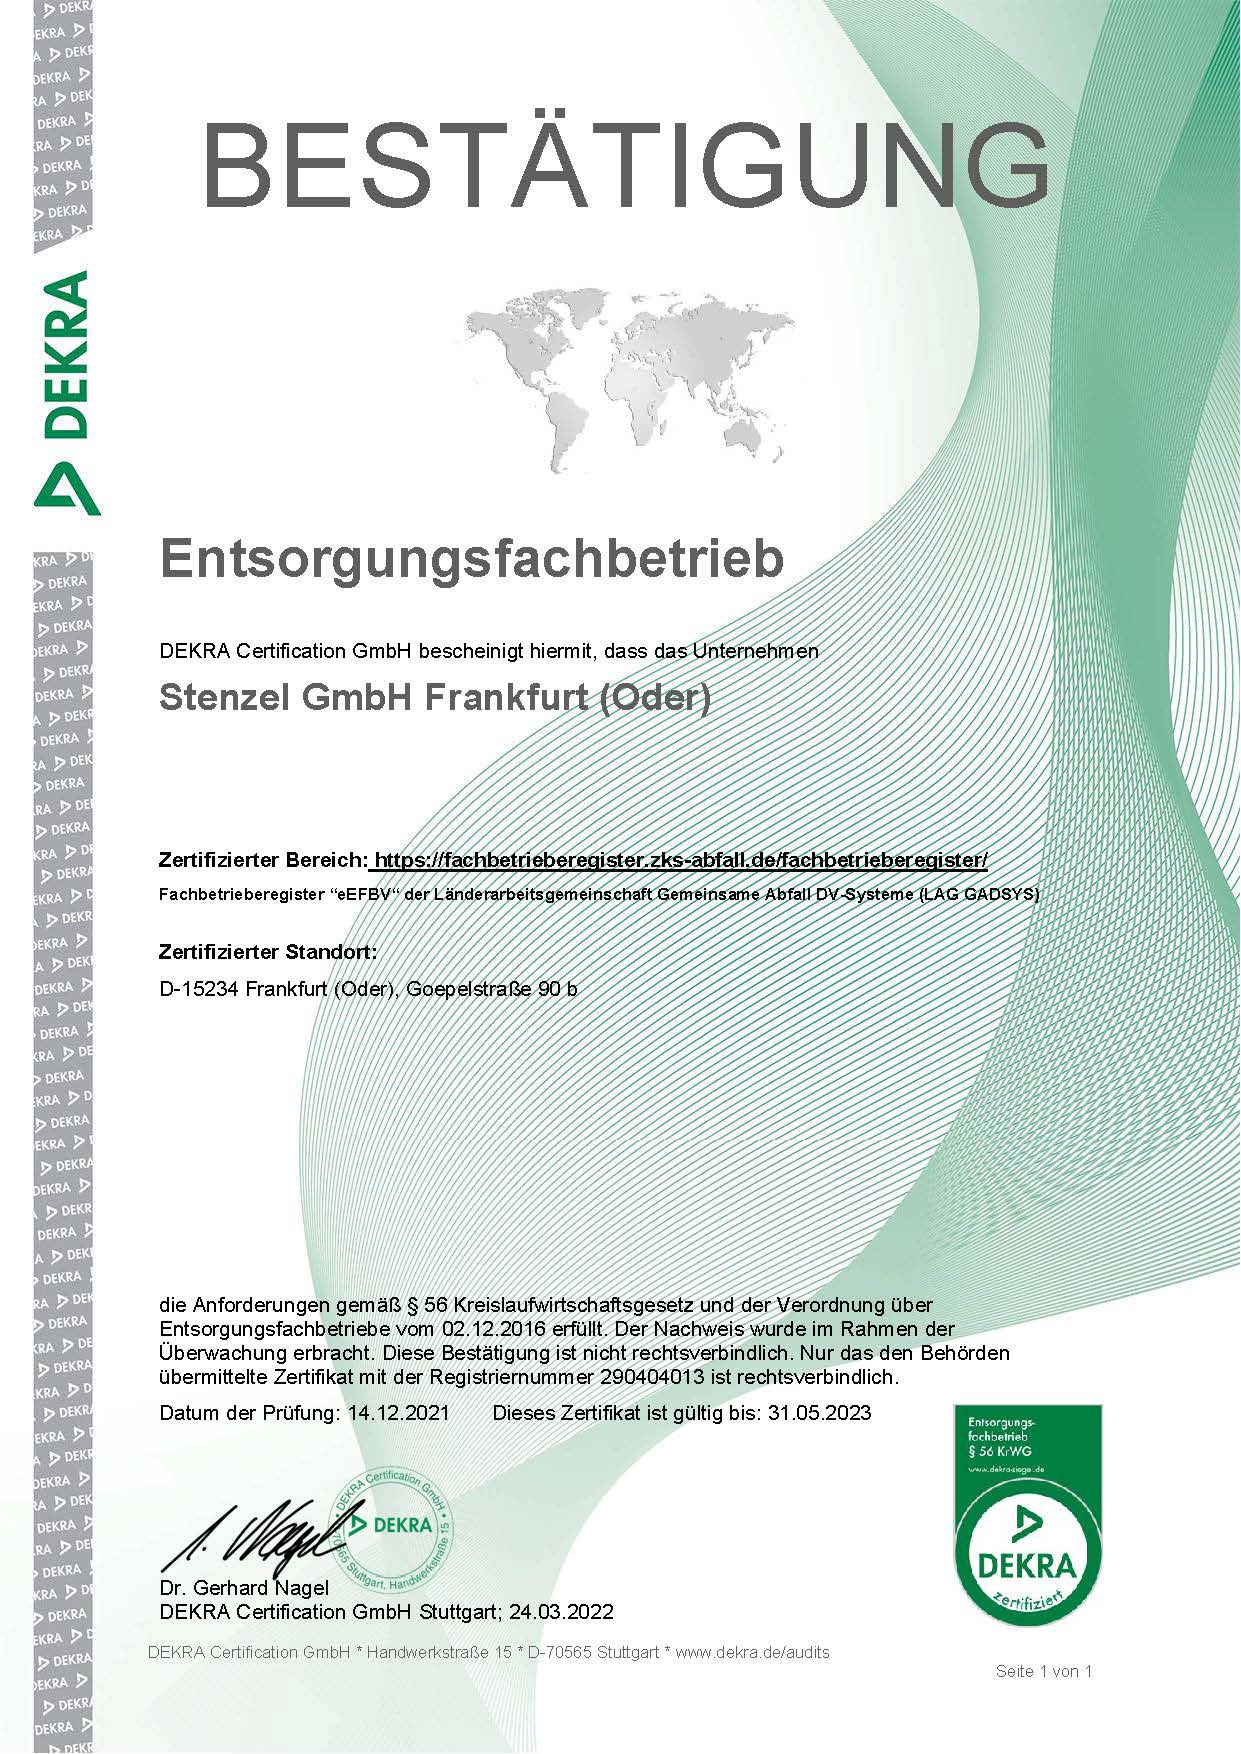 EFB-Zertifikat